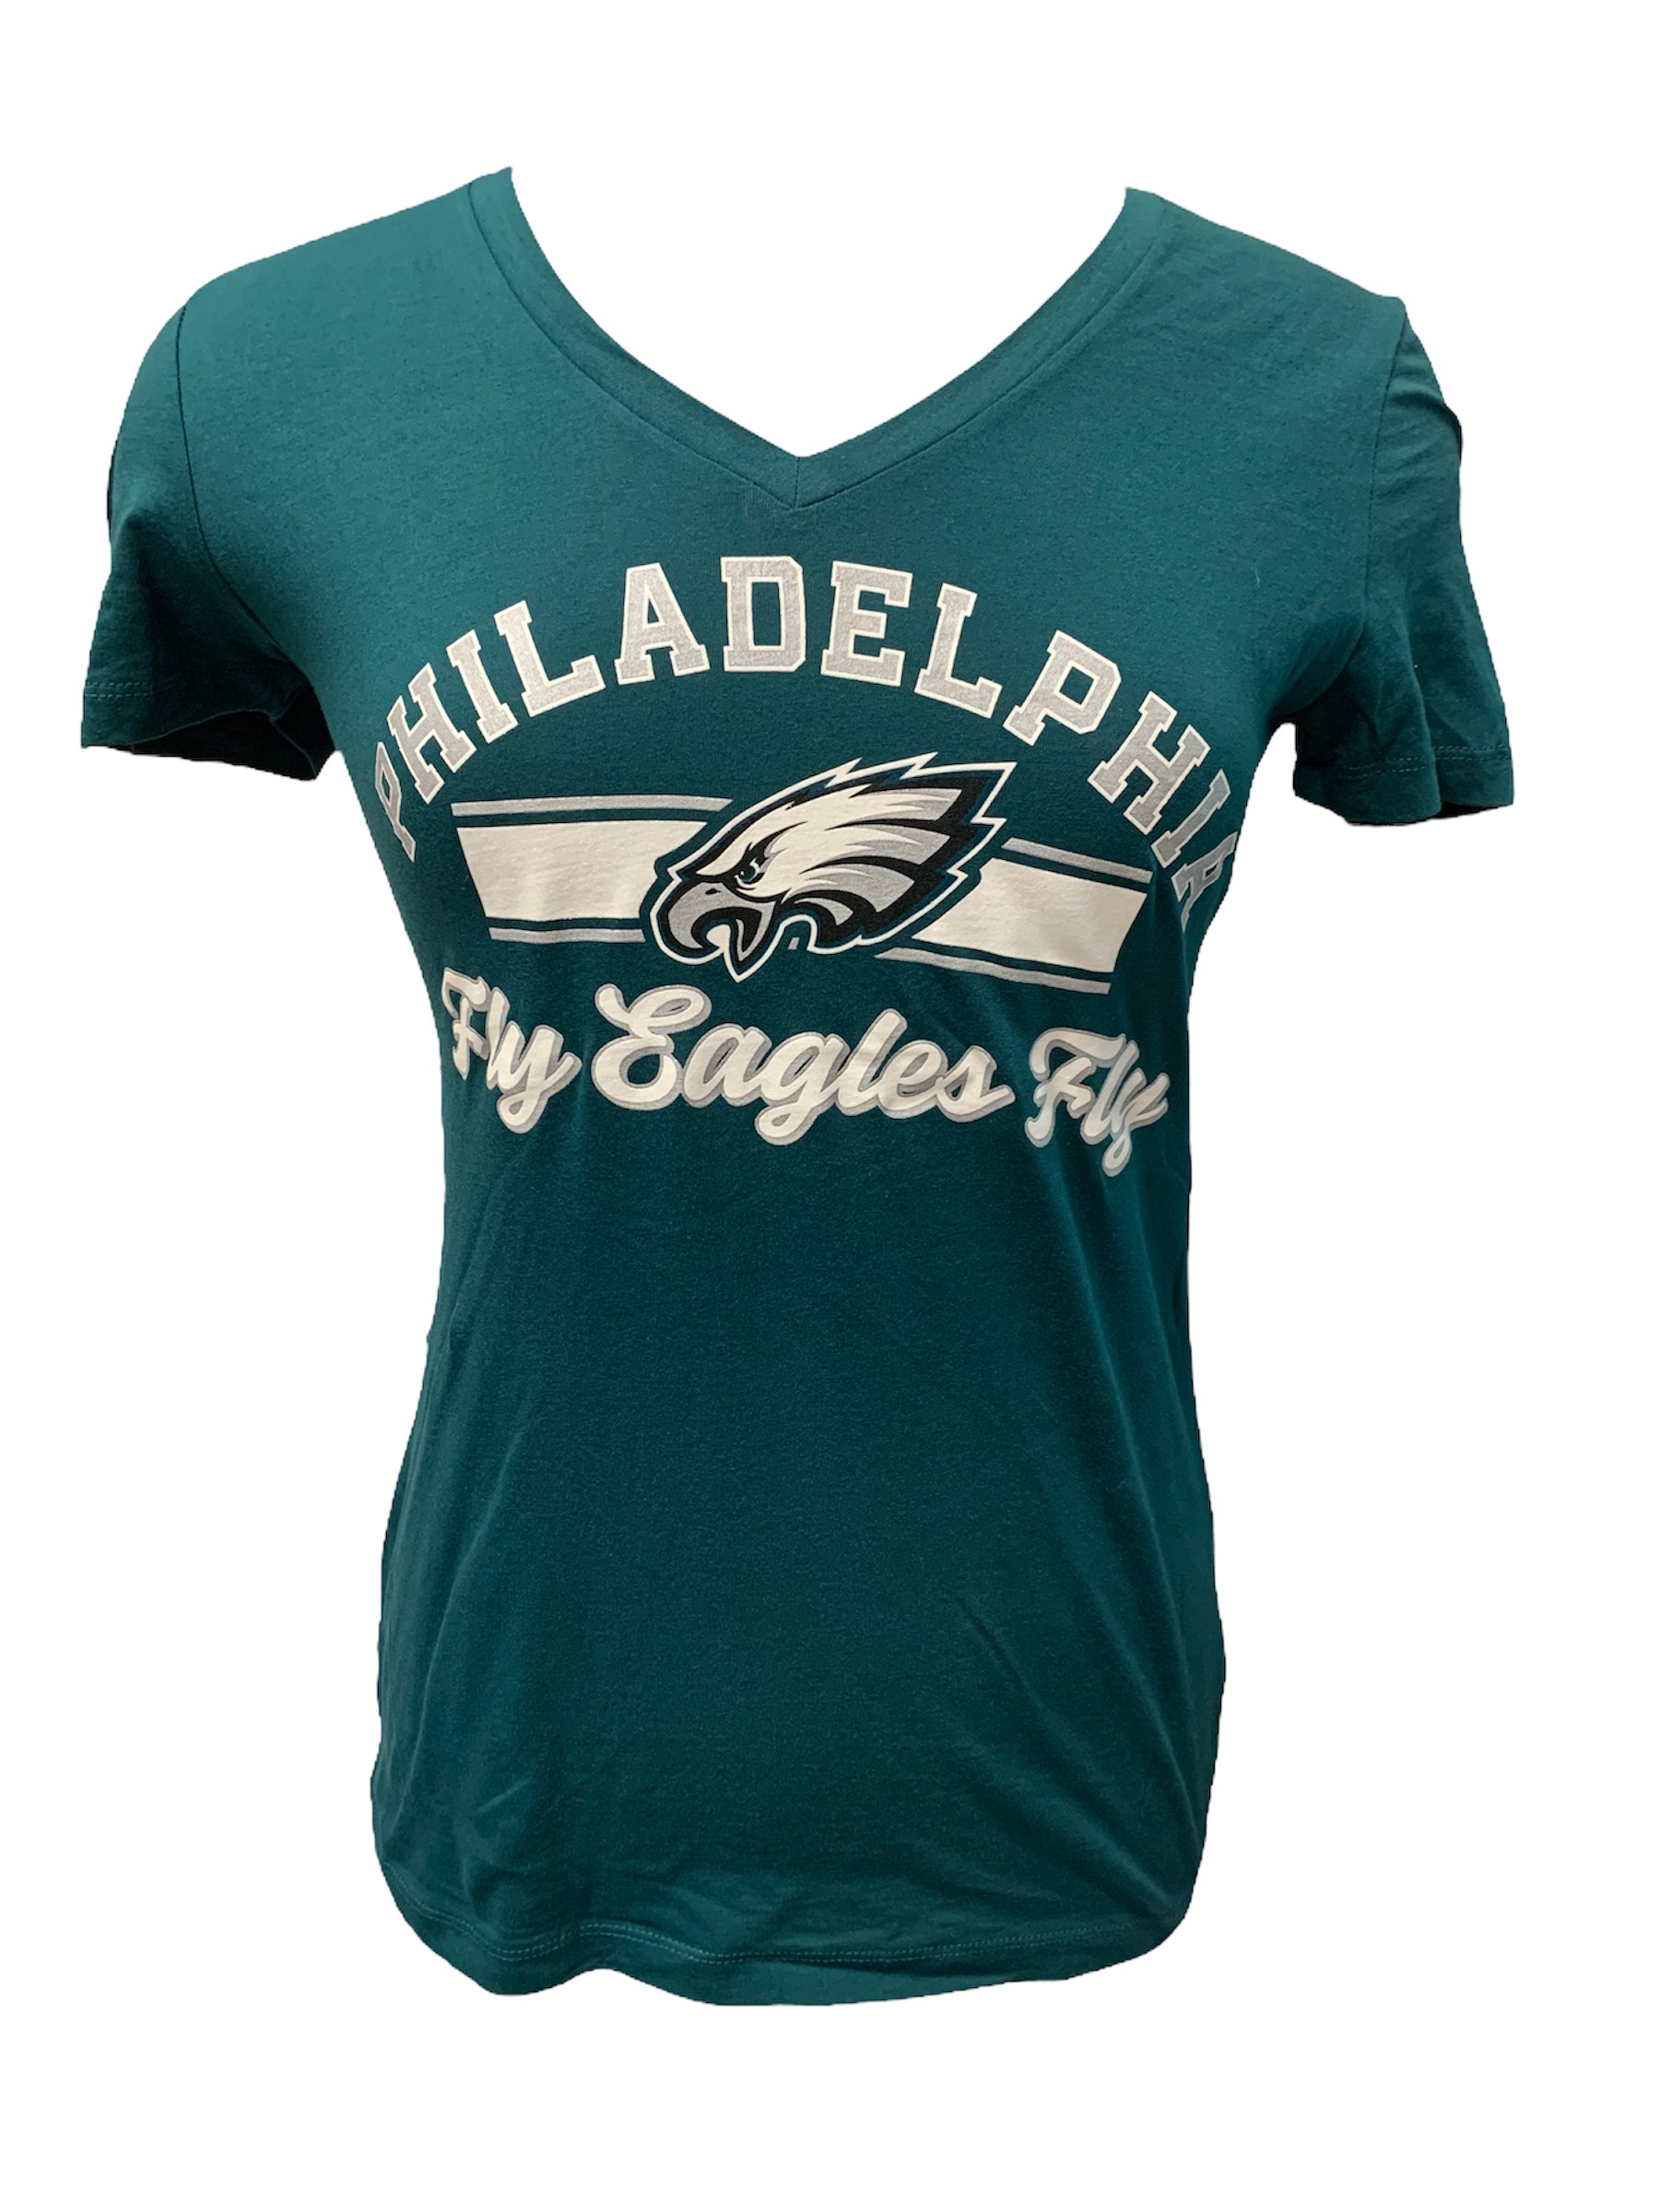 Philadelphia Eagles - Philadelphia Eagles - T-Shirt